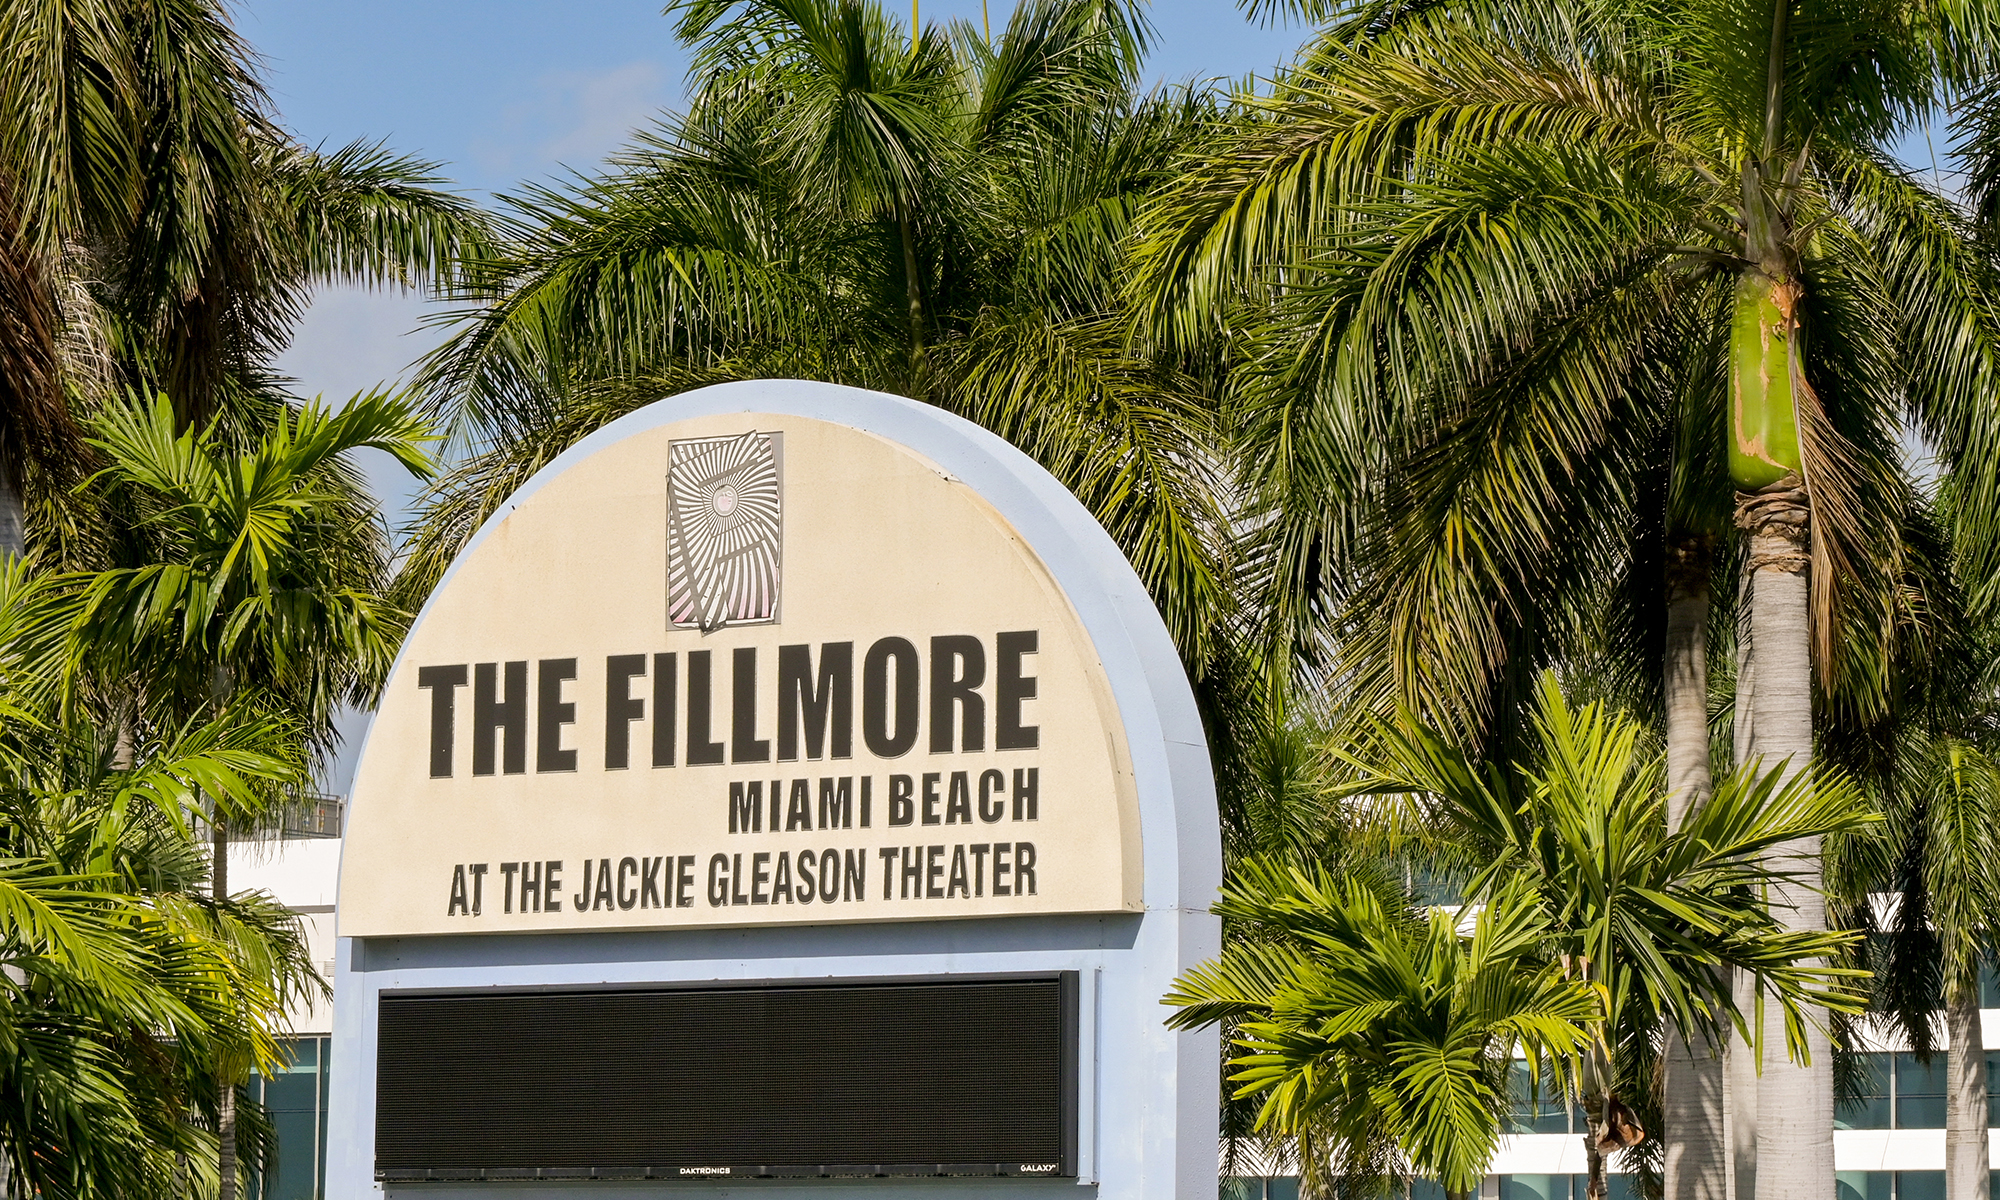 The-Fillmore-Miami-Beach-at-Jackie-Gleason-Theater.